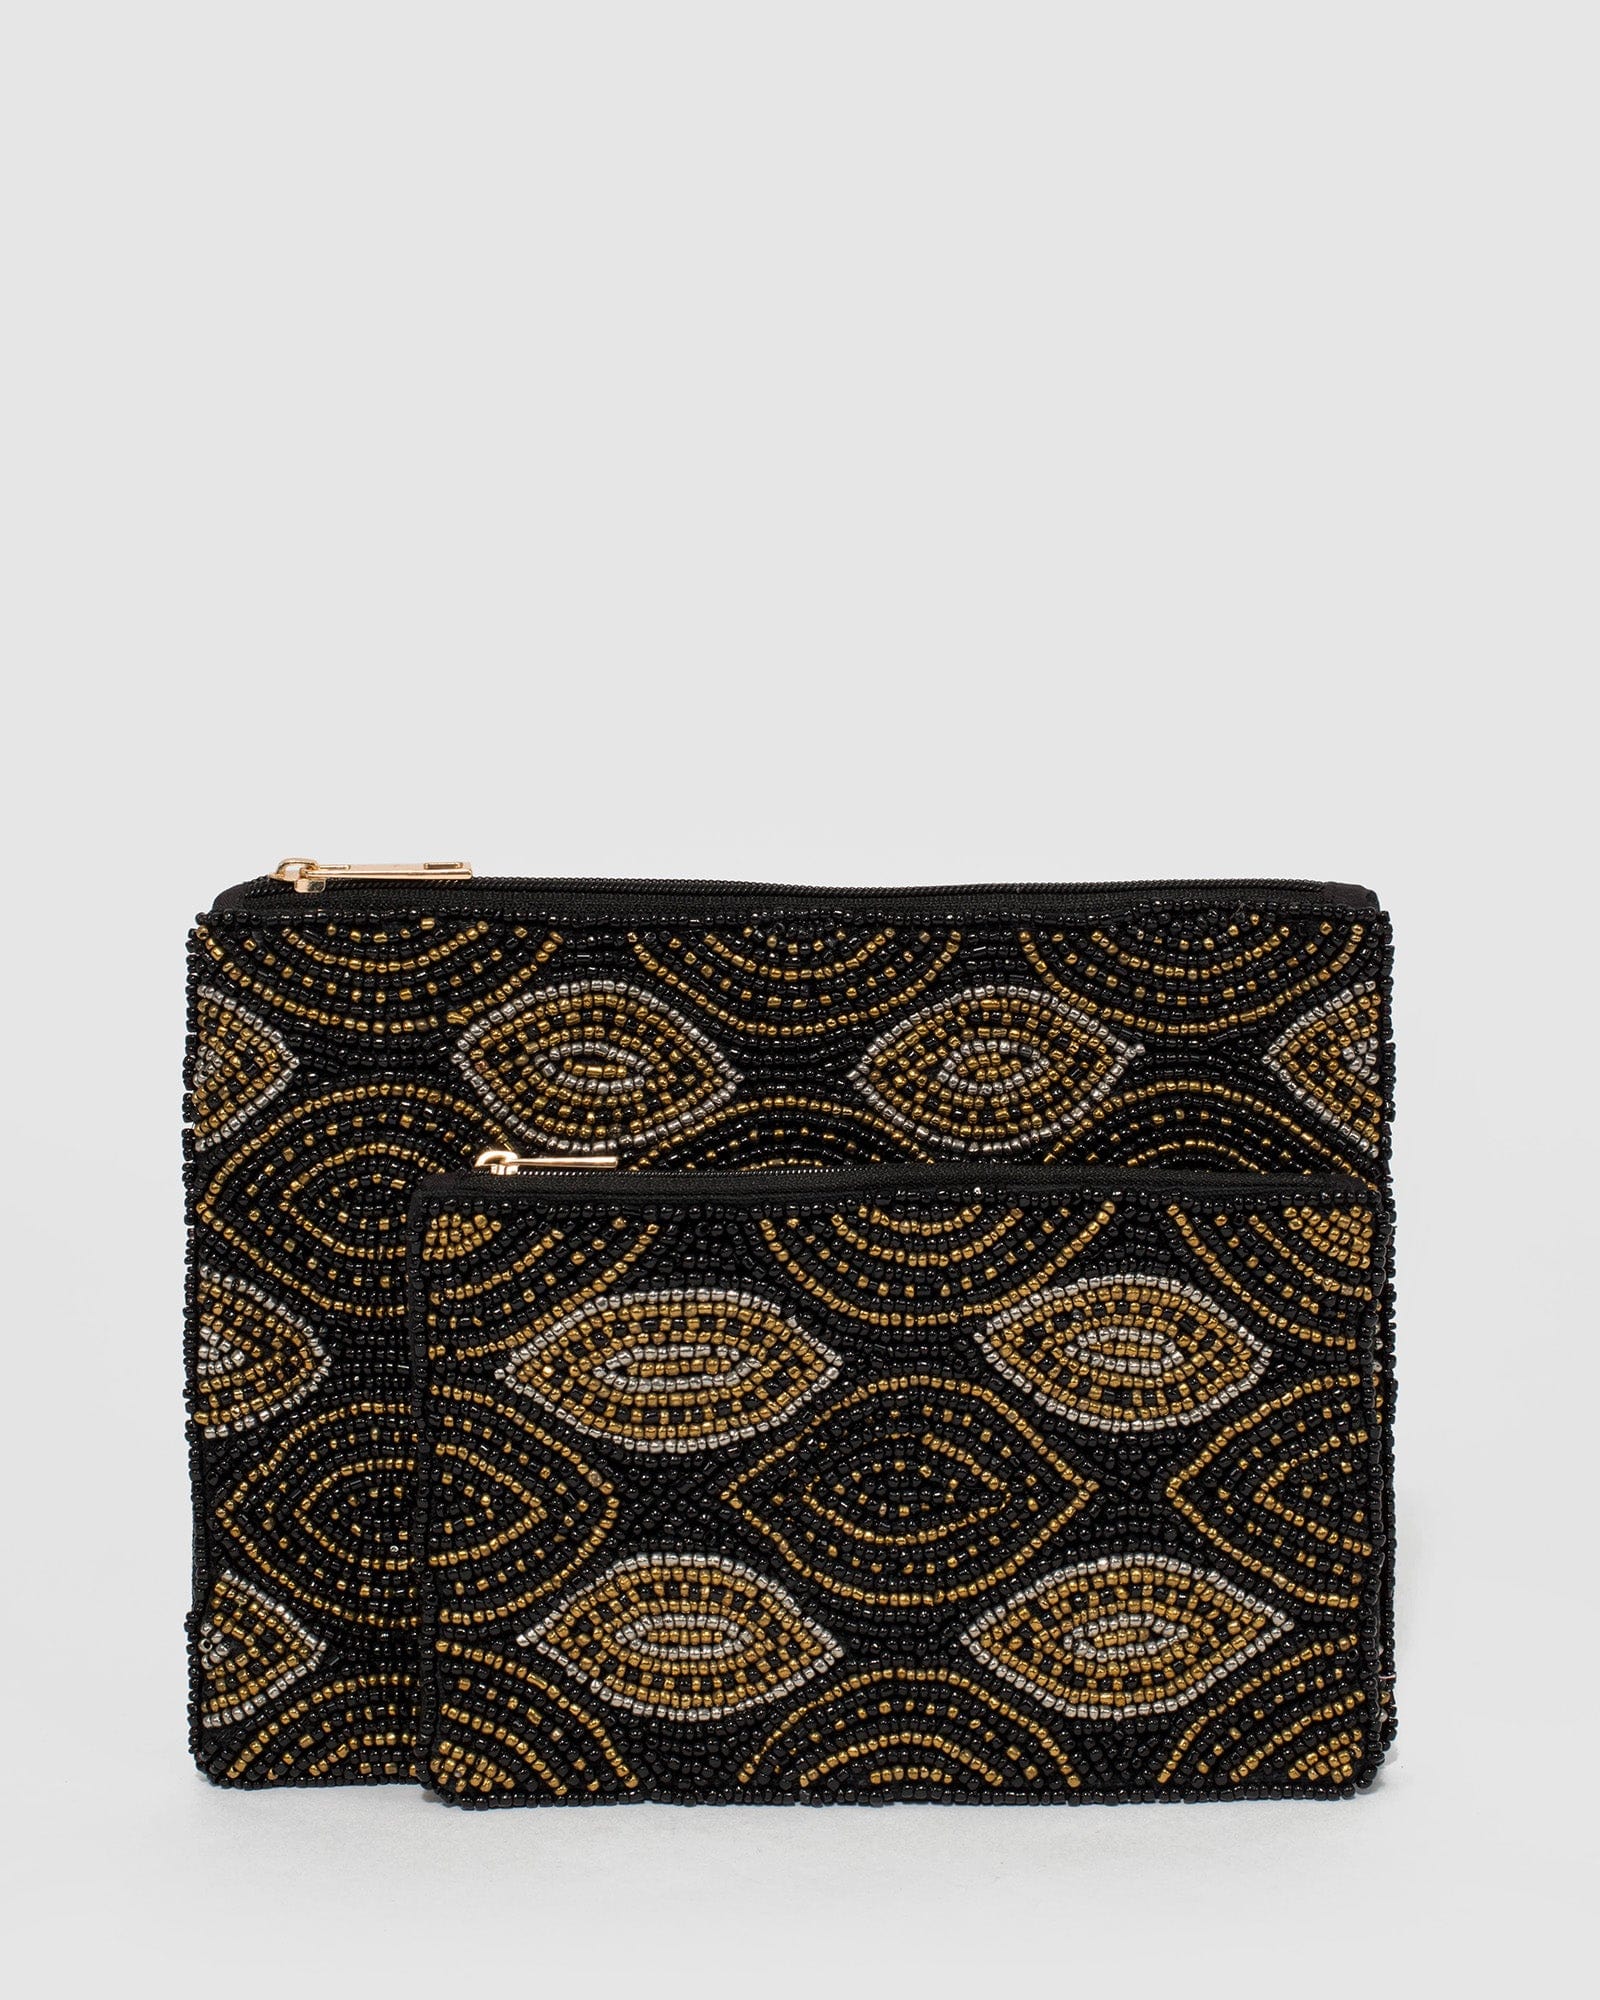 colette clutch bag shoulder chain womens handbag purse | eBay